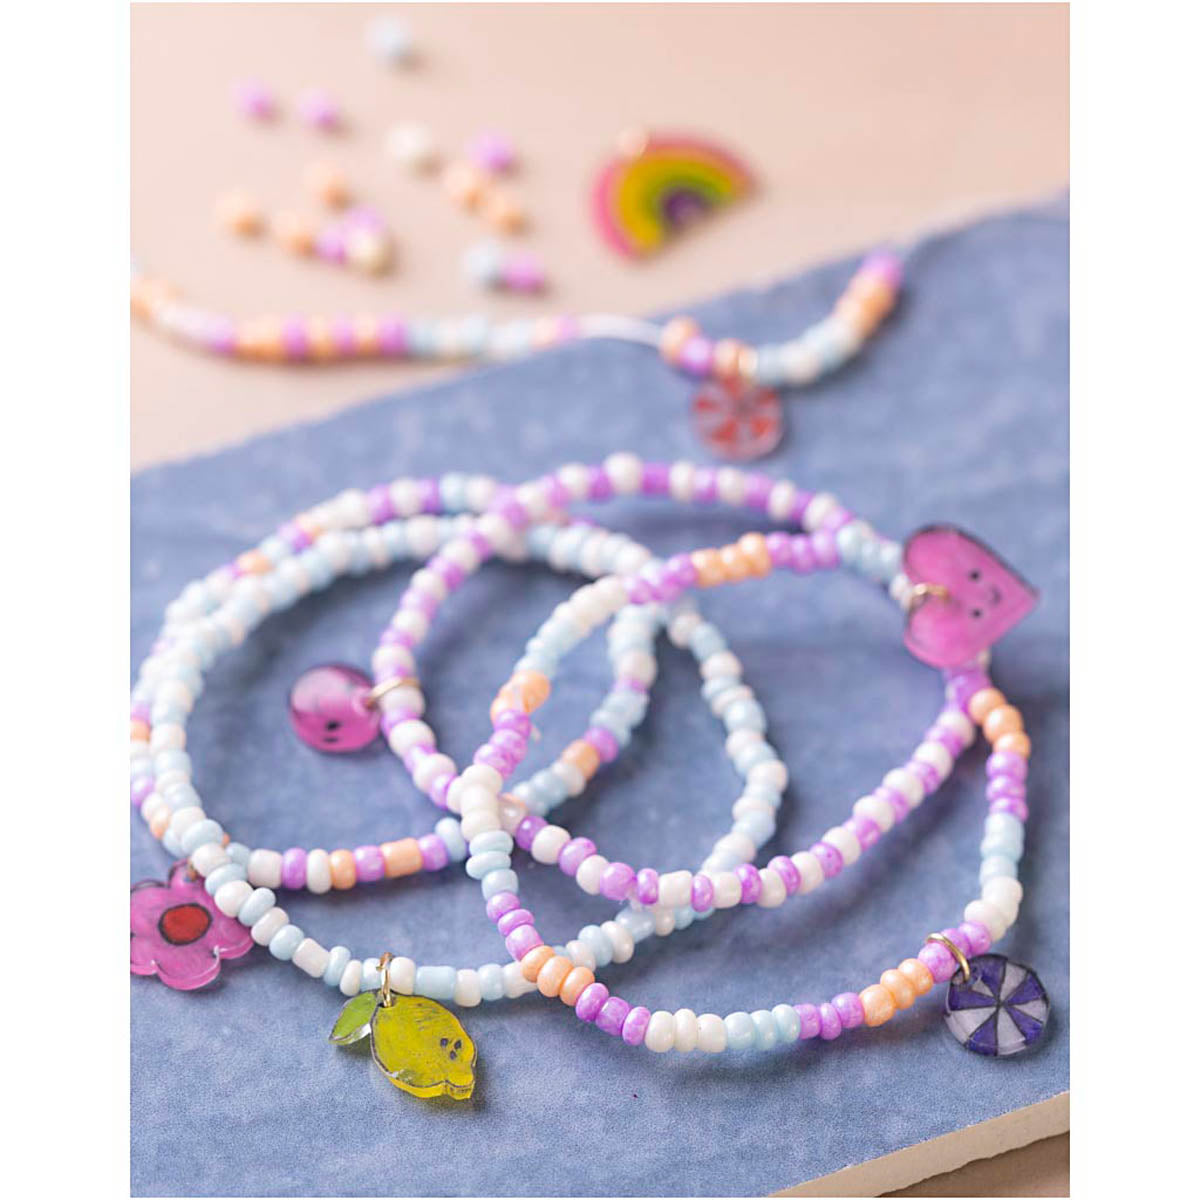 Creativ - Mini Craft Kit Jewellery Shrink Plastic Bracelets - 1 pack